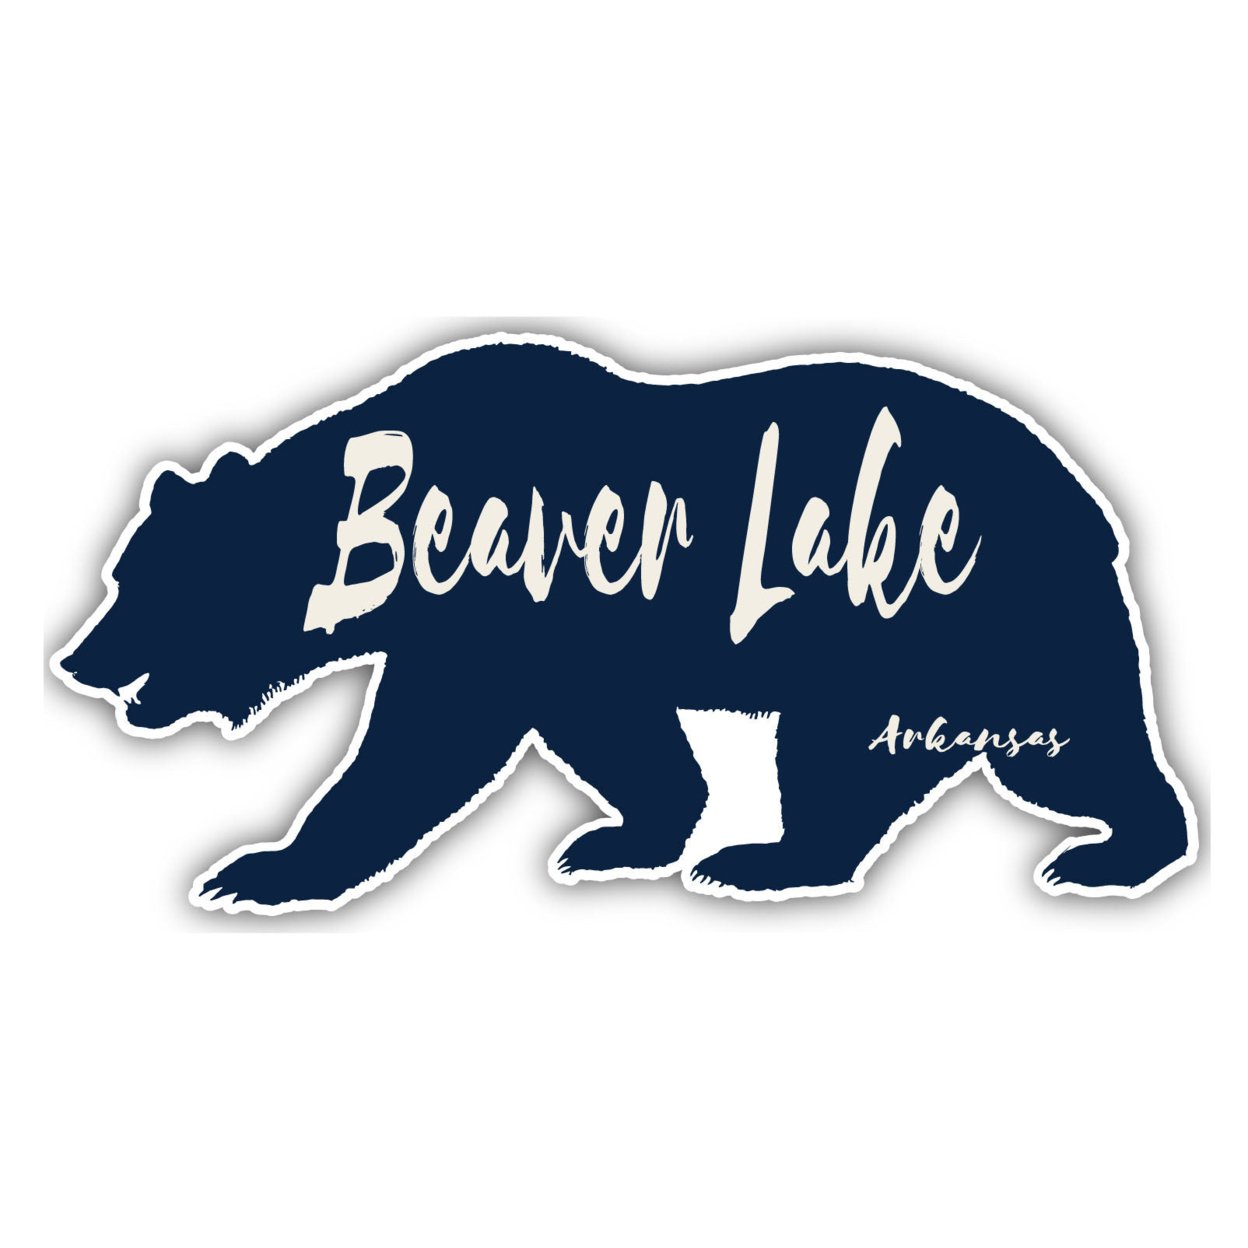 Beaver Lake Arkansas Souvenir Decorative Stickers (Choose Theme And Size) - Single Unit, 8-Inch, Bear